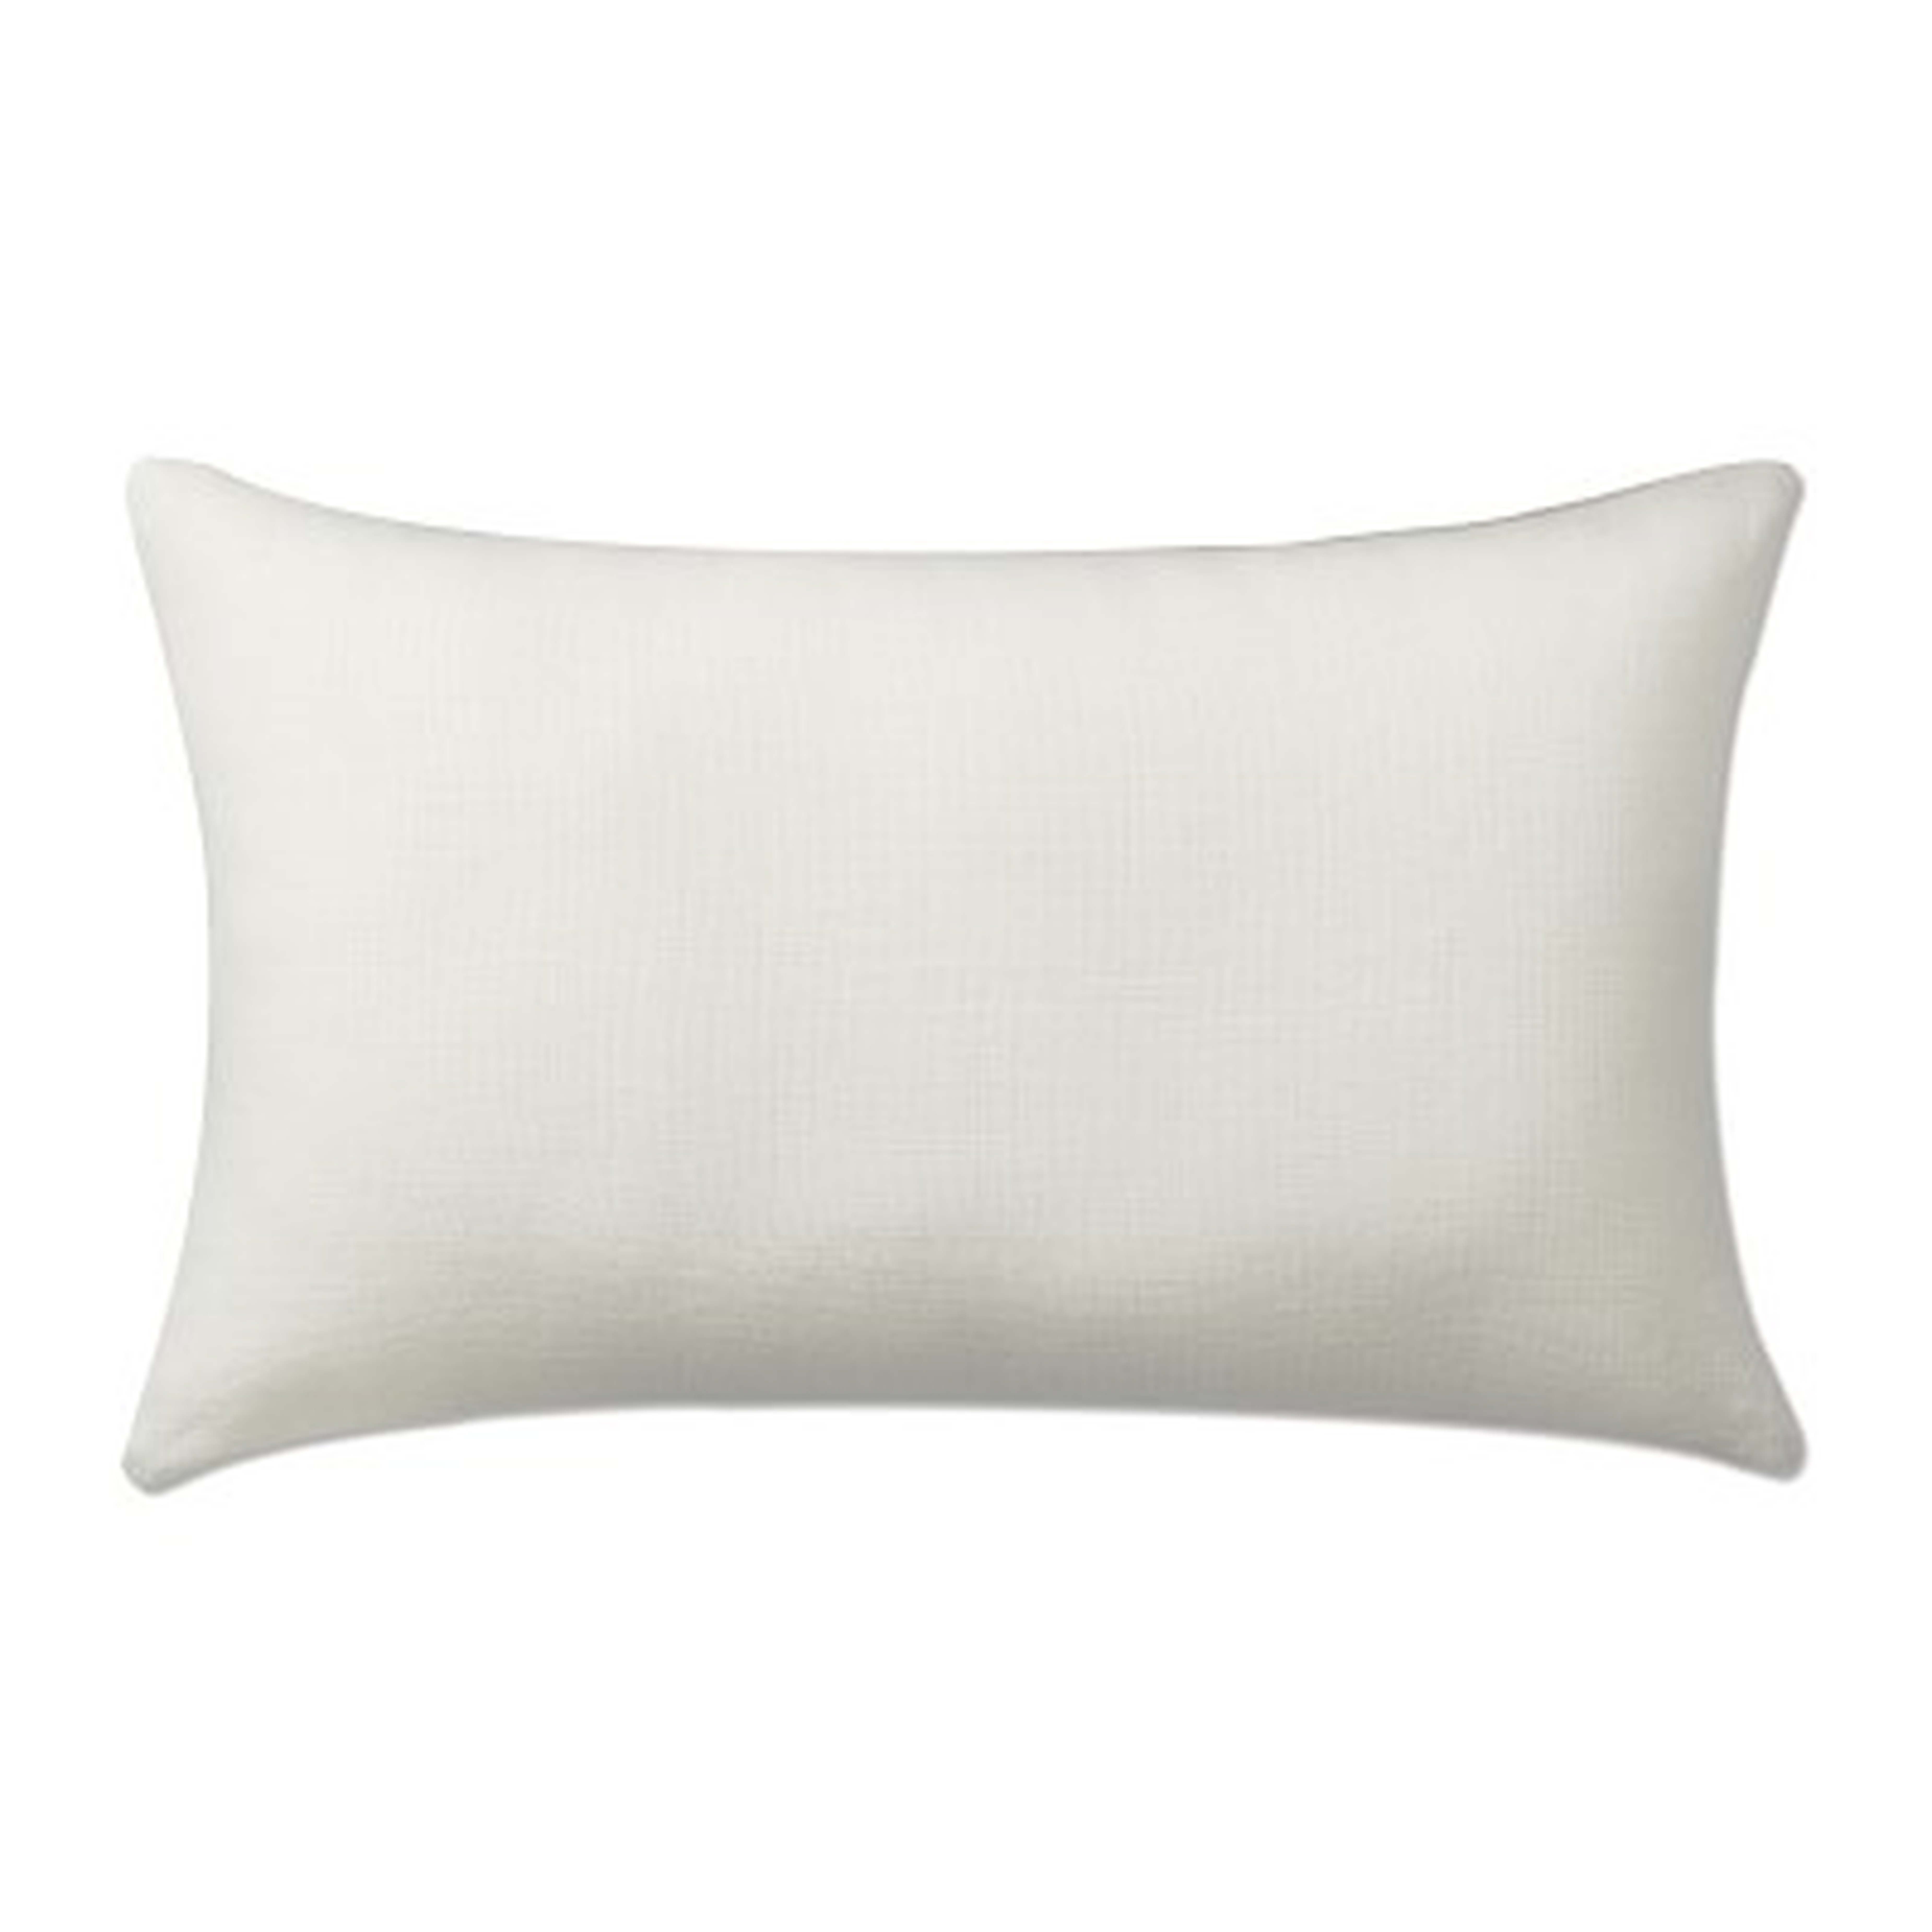 Reversible Belgian Linen Lumbar Pillow Cover, 14" X 22", Oyster/Natural - Williams Sonoma